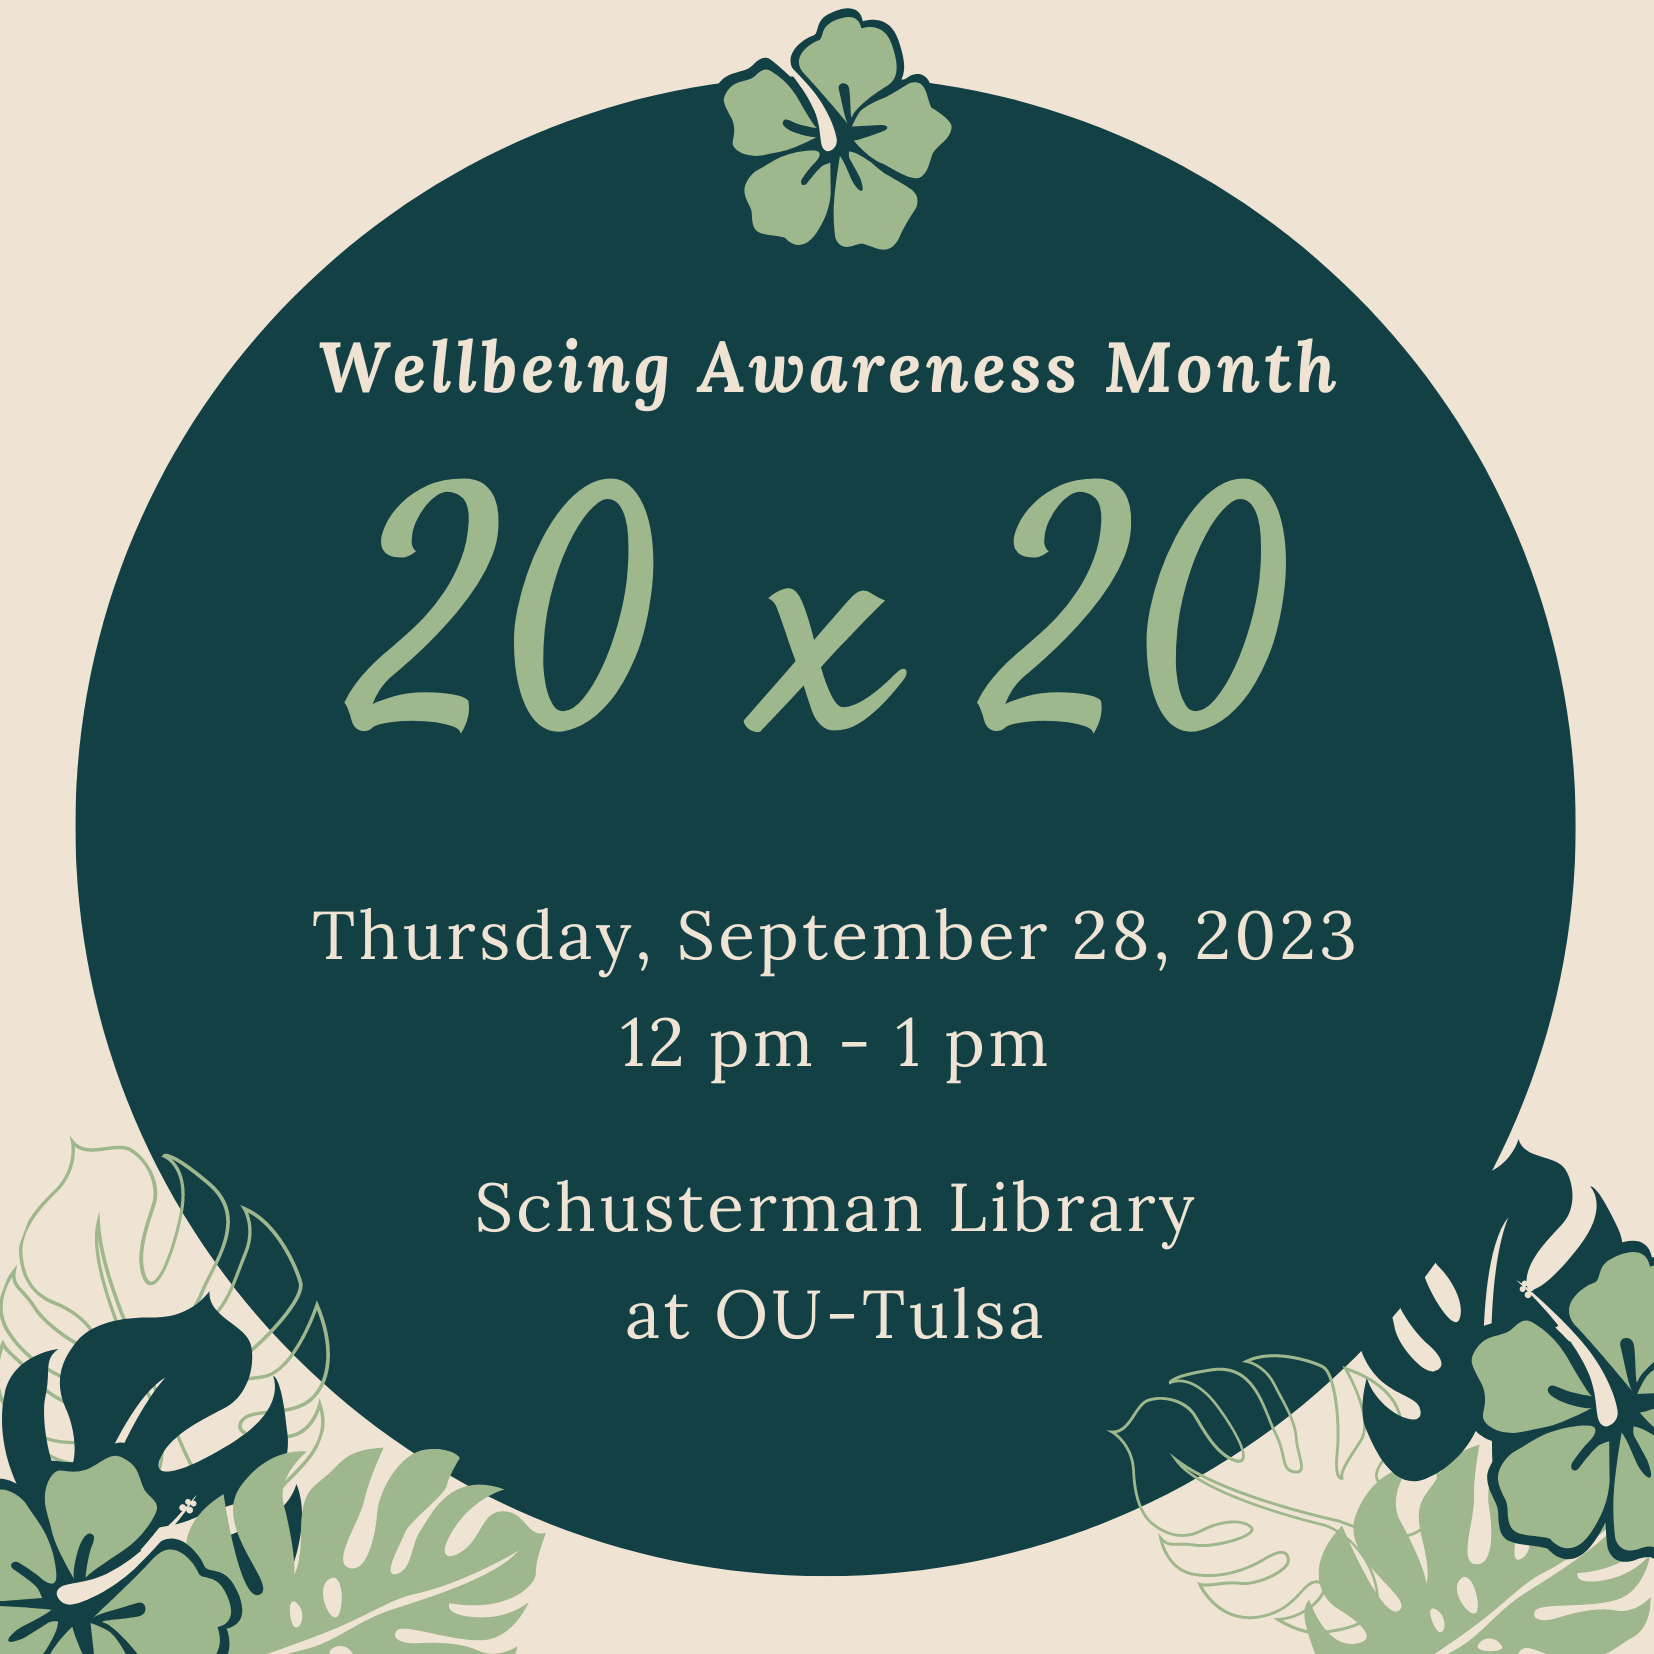 Wellbeing Awareness Month 20x20, Thursday, September 28, 2023, 12-1 pm